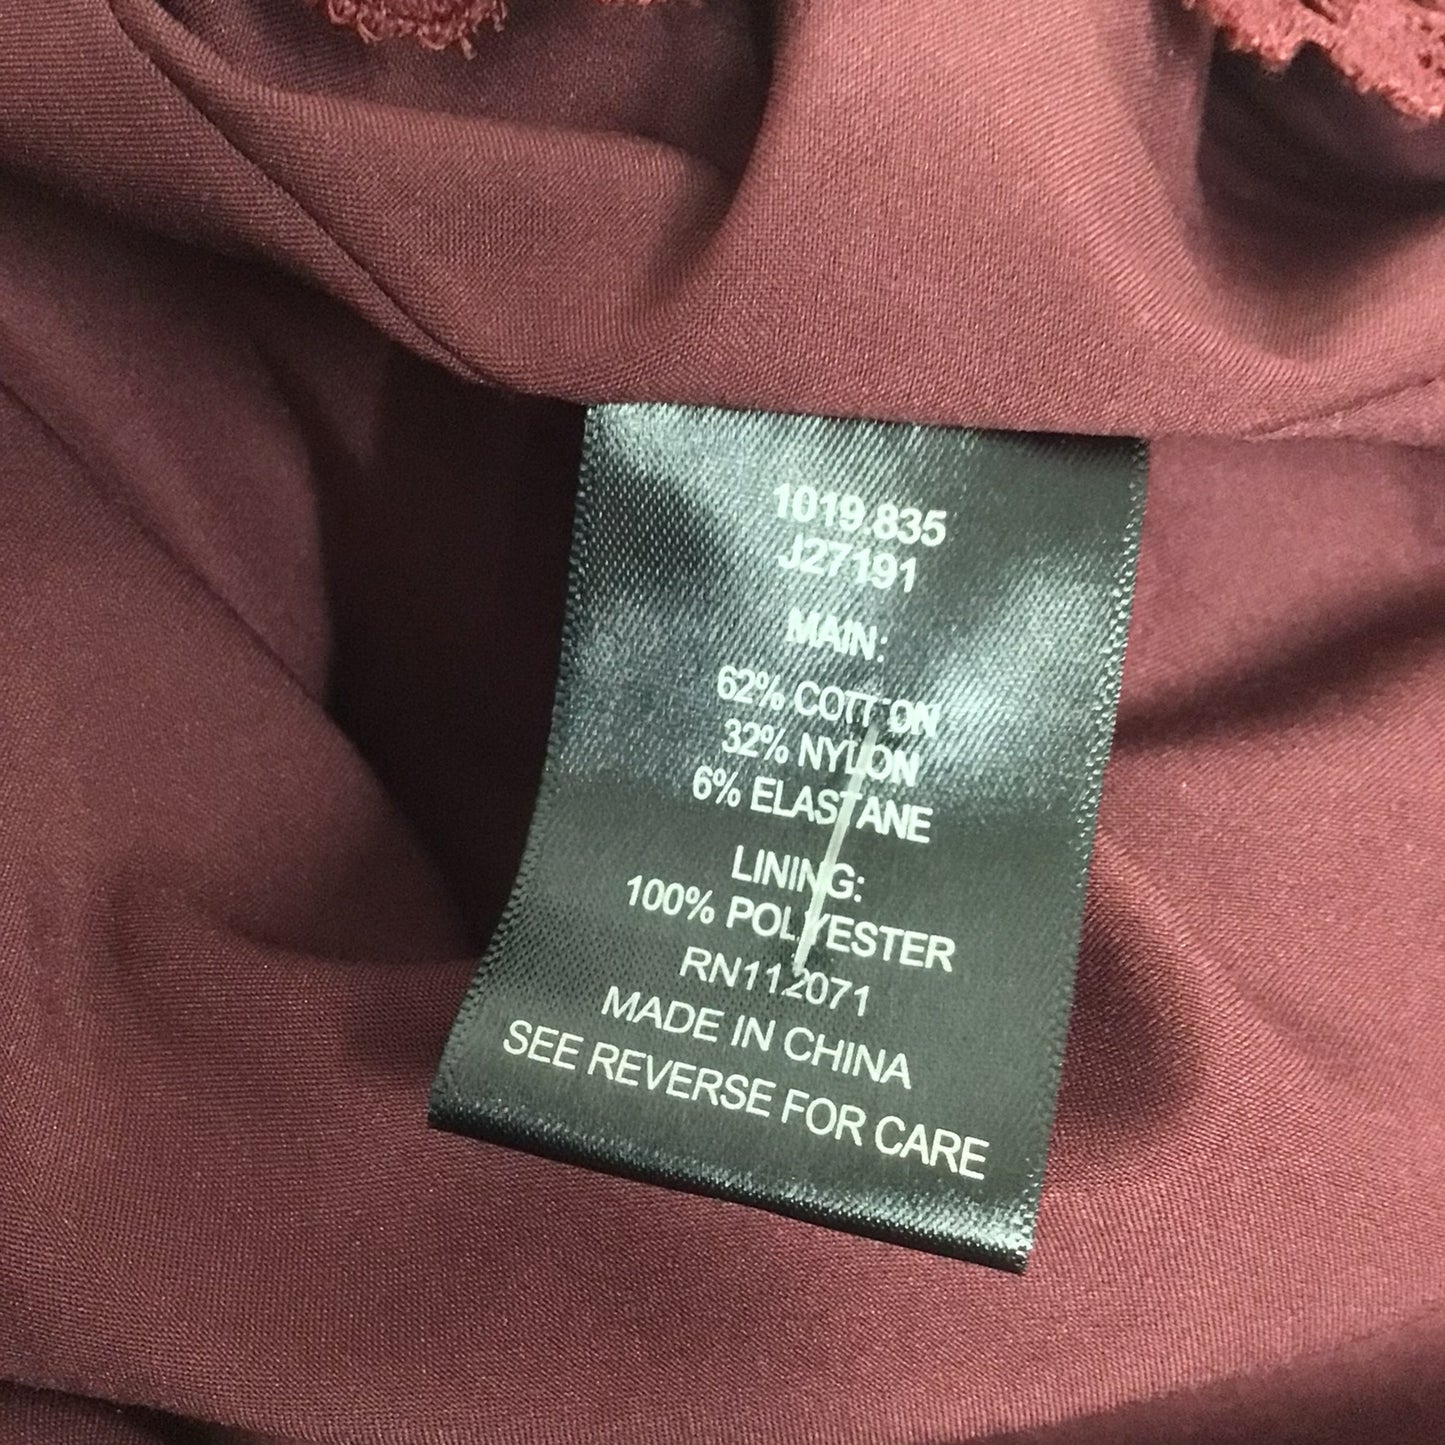 Jigsaw Maroon V-Neck Dress w/Lace Details Size 10